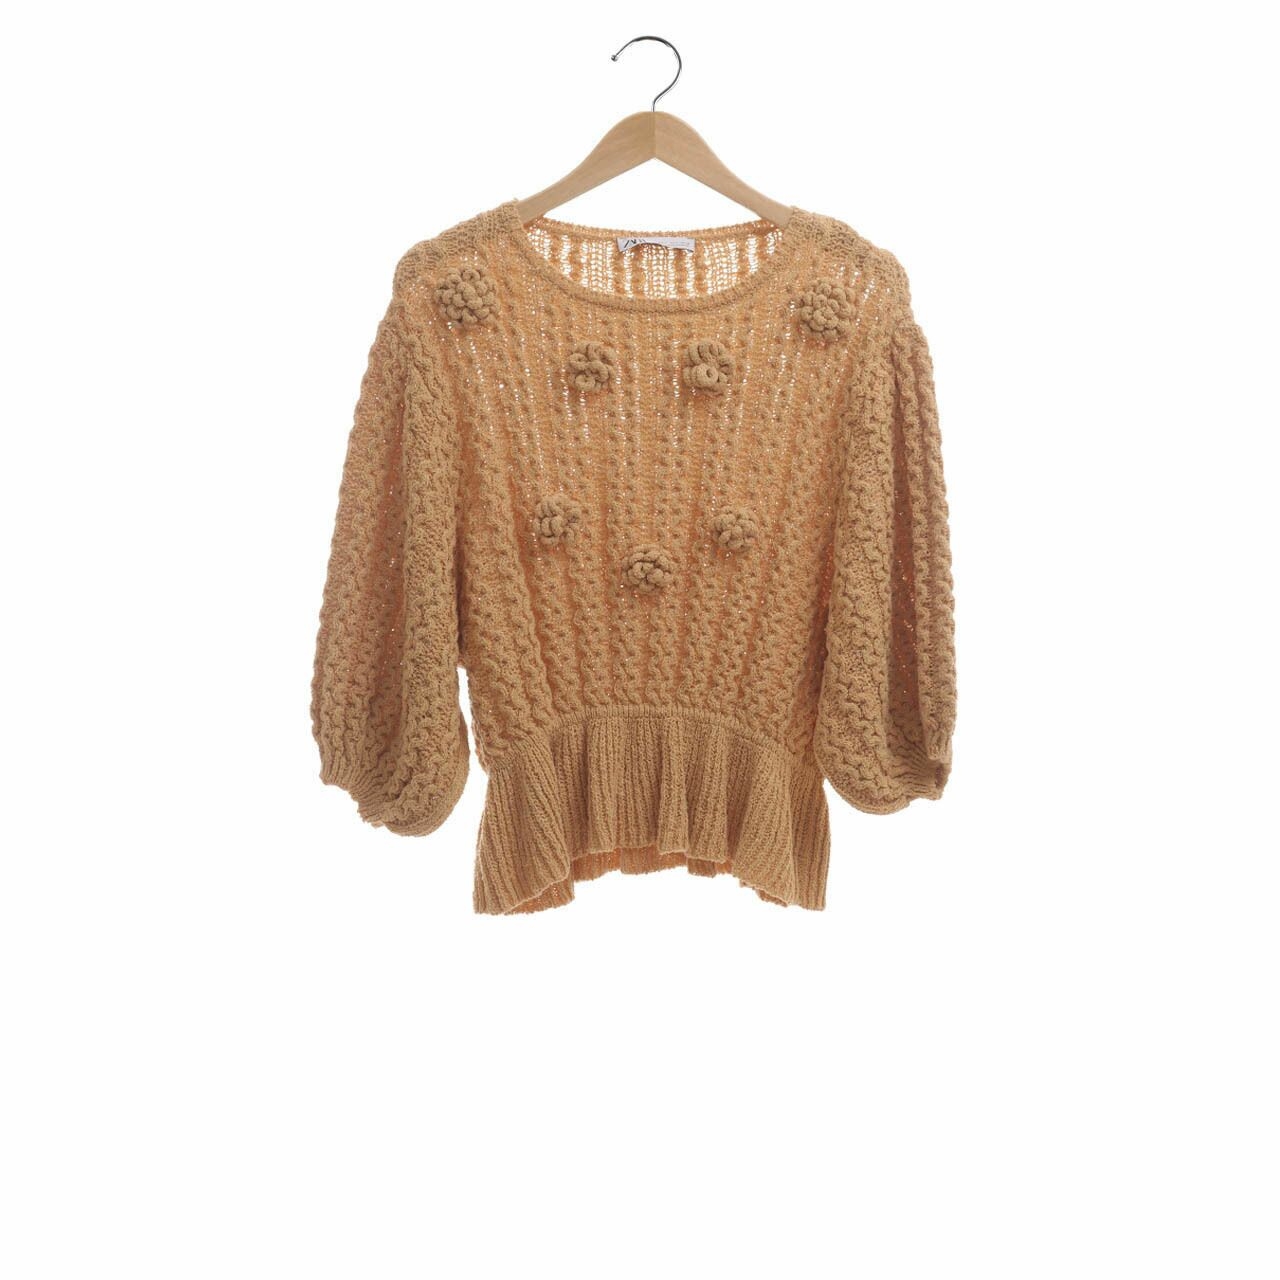 Zara Mustard Knit Blouse